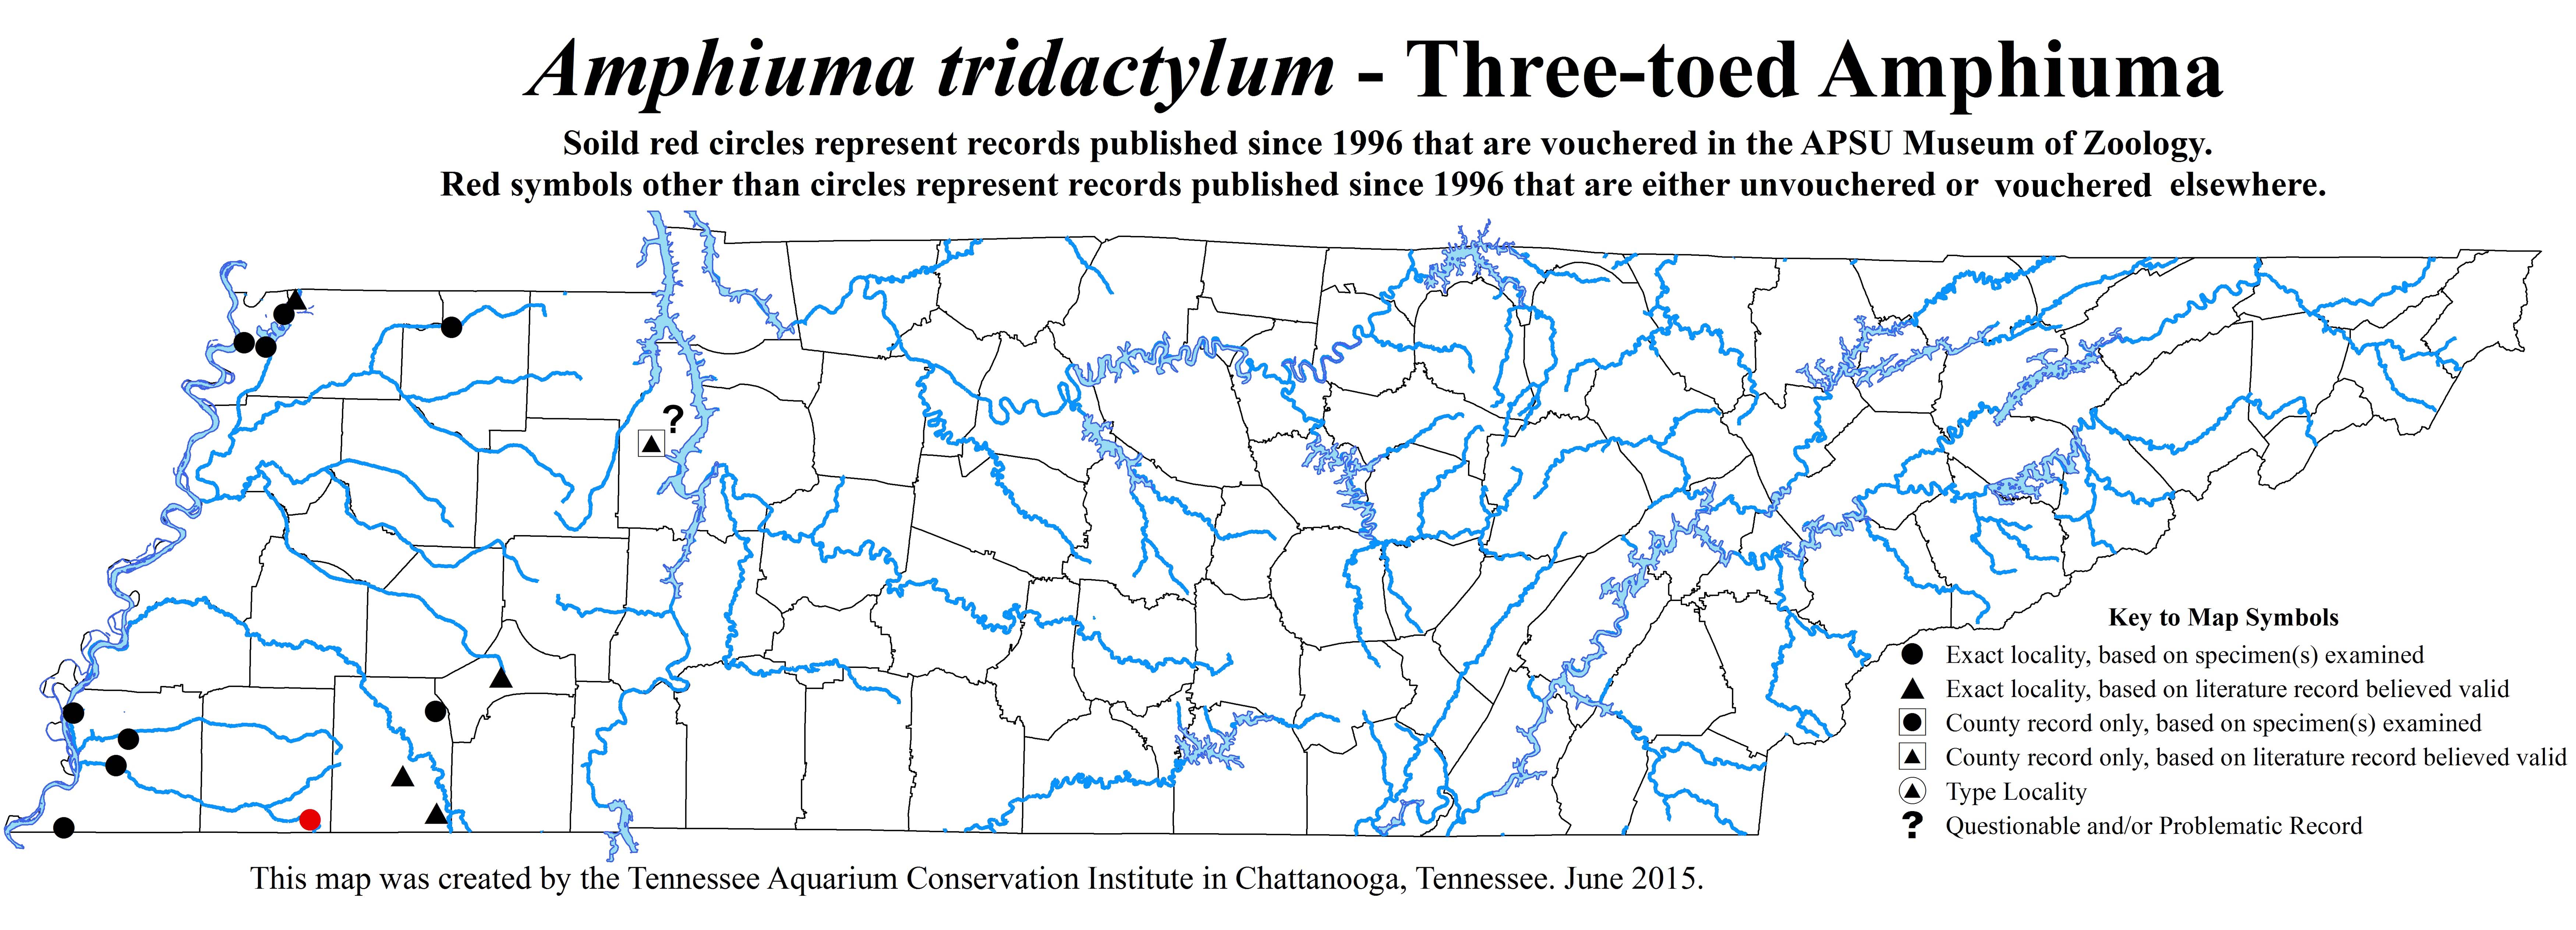 New Distribution Map - Amphiuma tridactylum Cuvier - Three-Toed Amphiuma